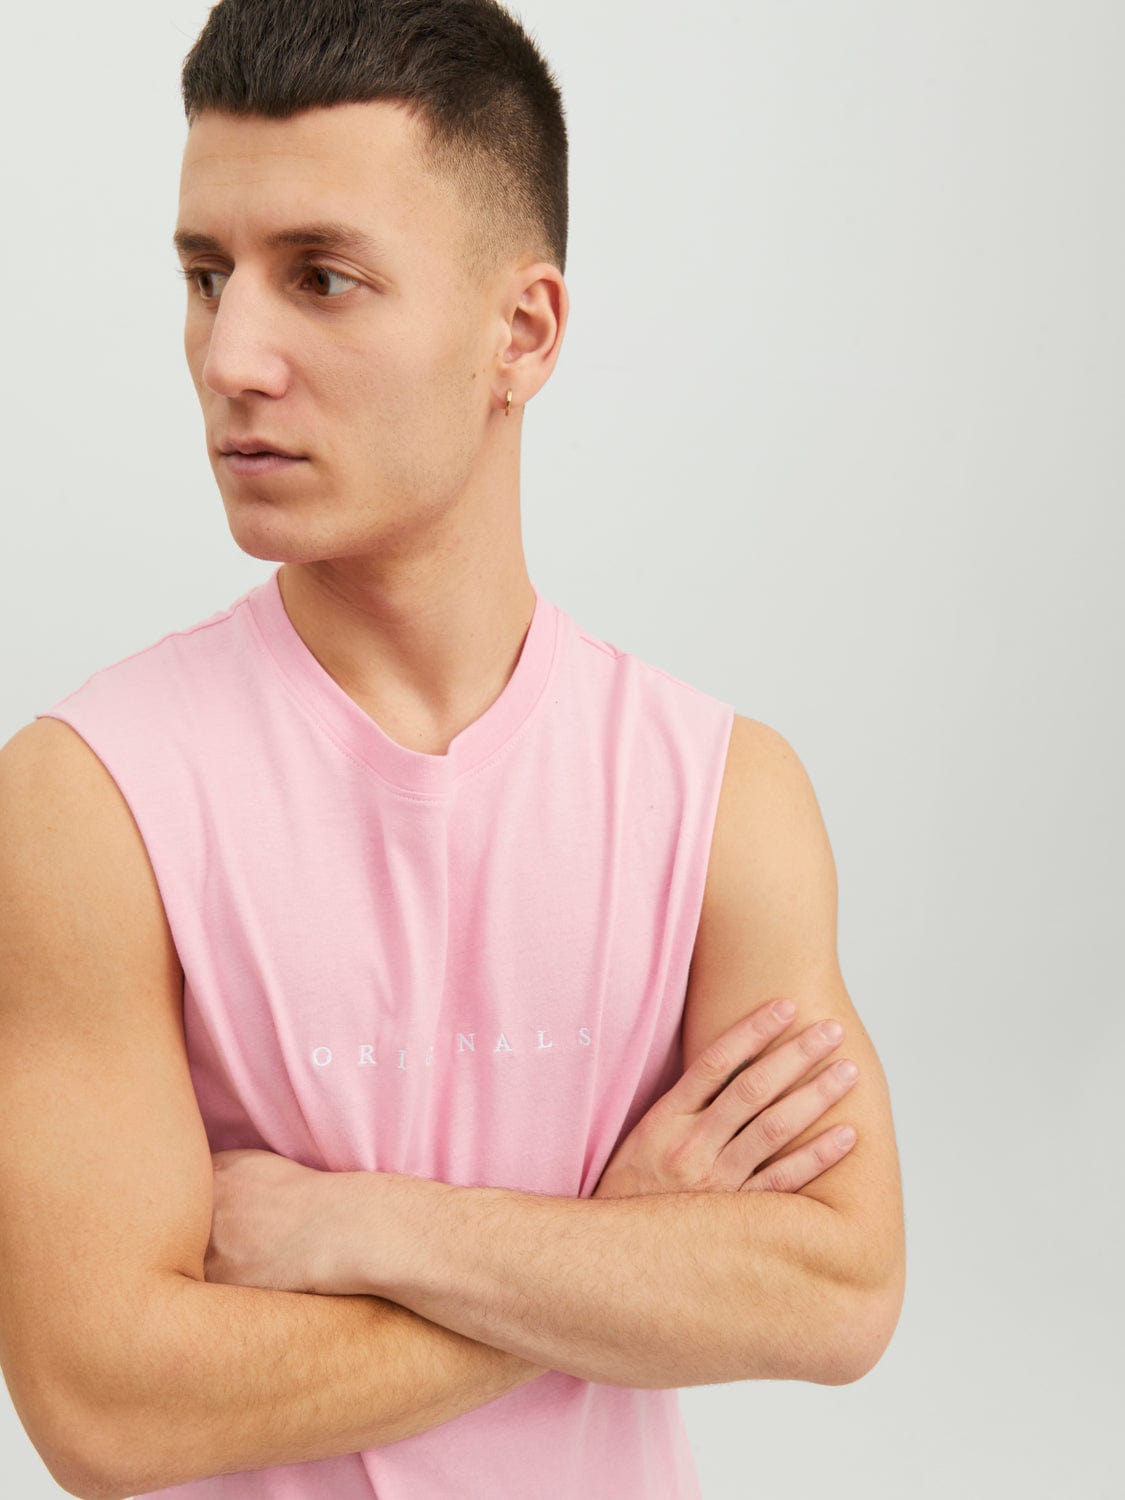 Camiseta sin mangas rosa - JORCOPENHAGEN